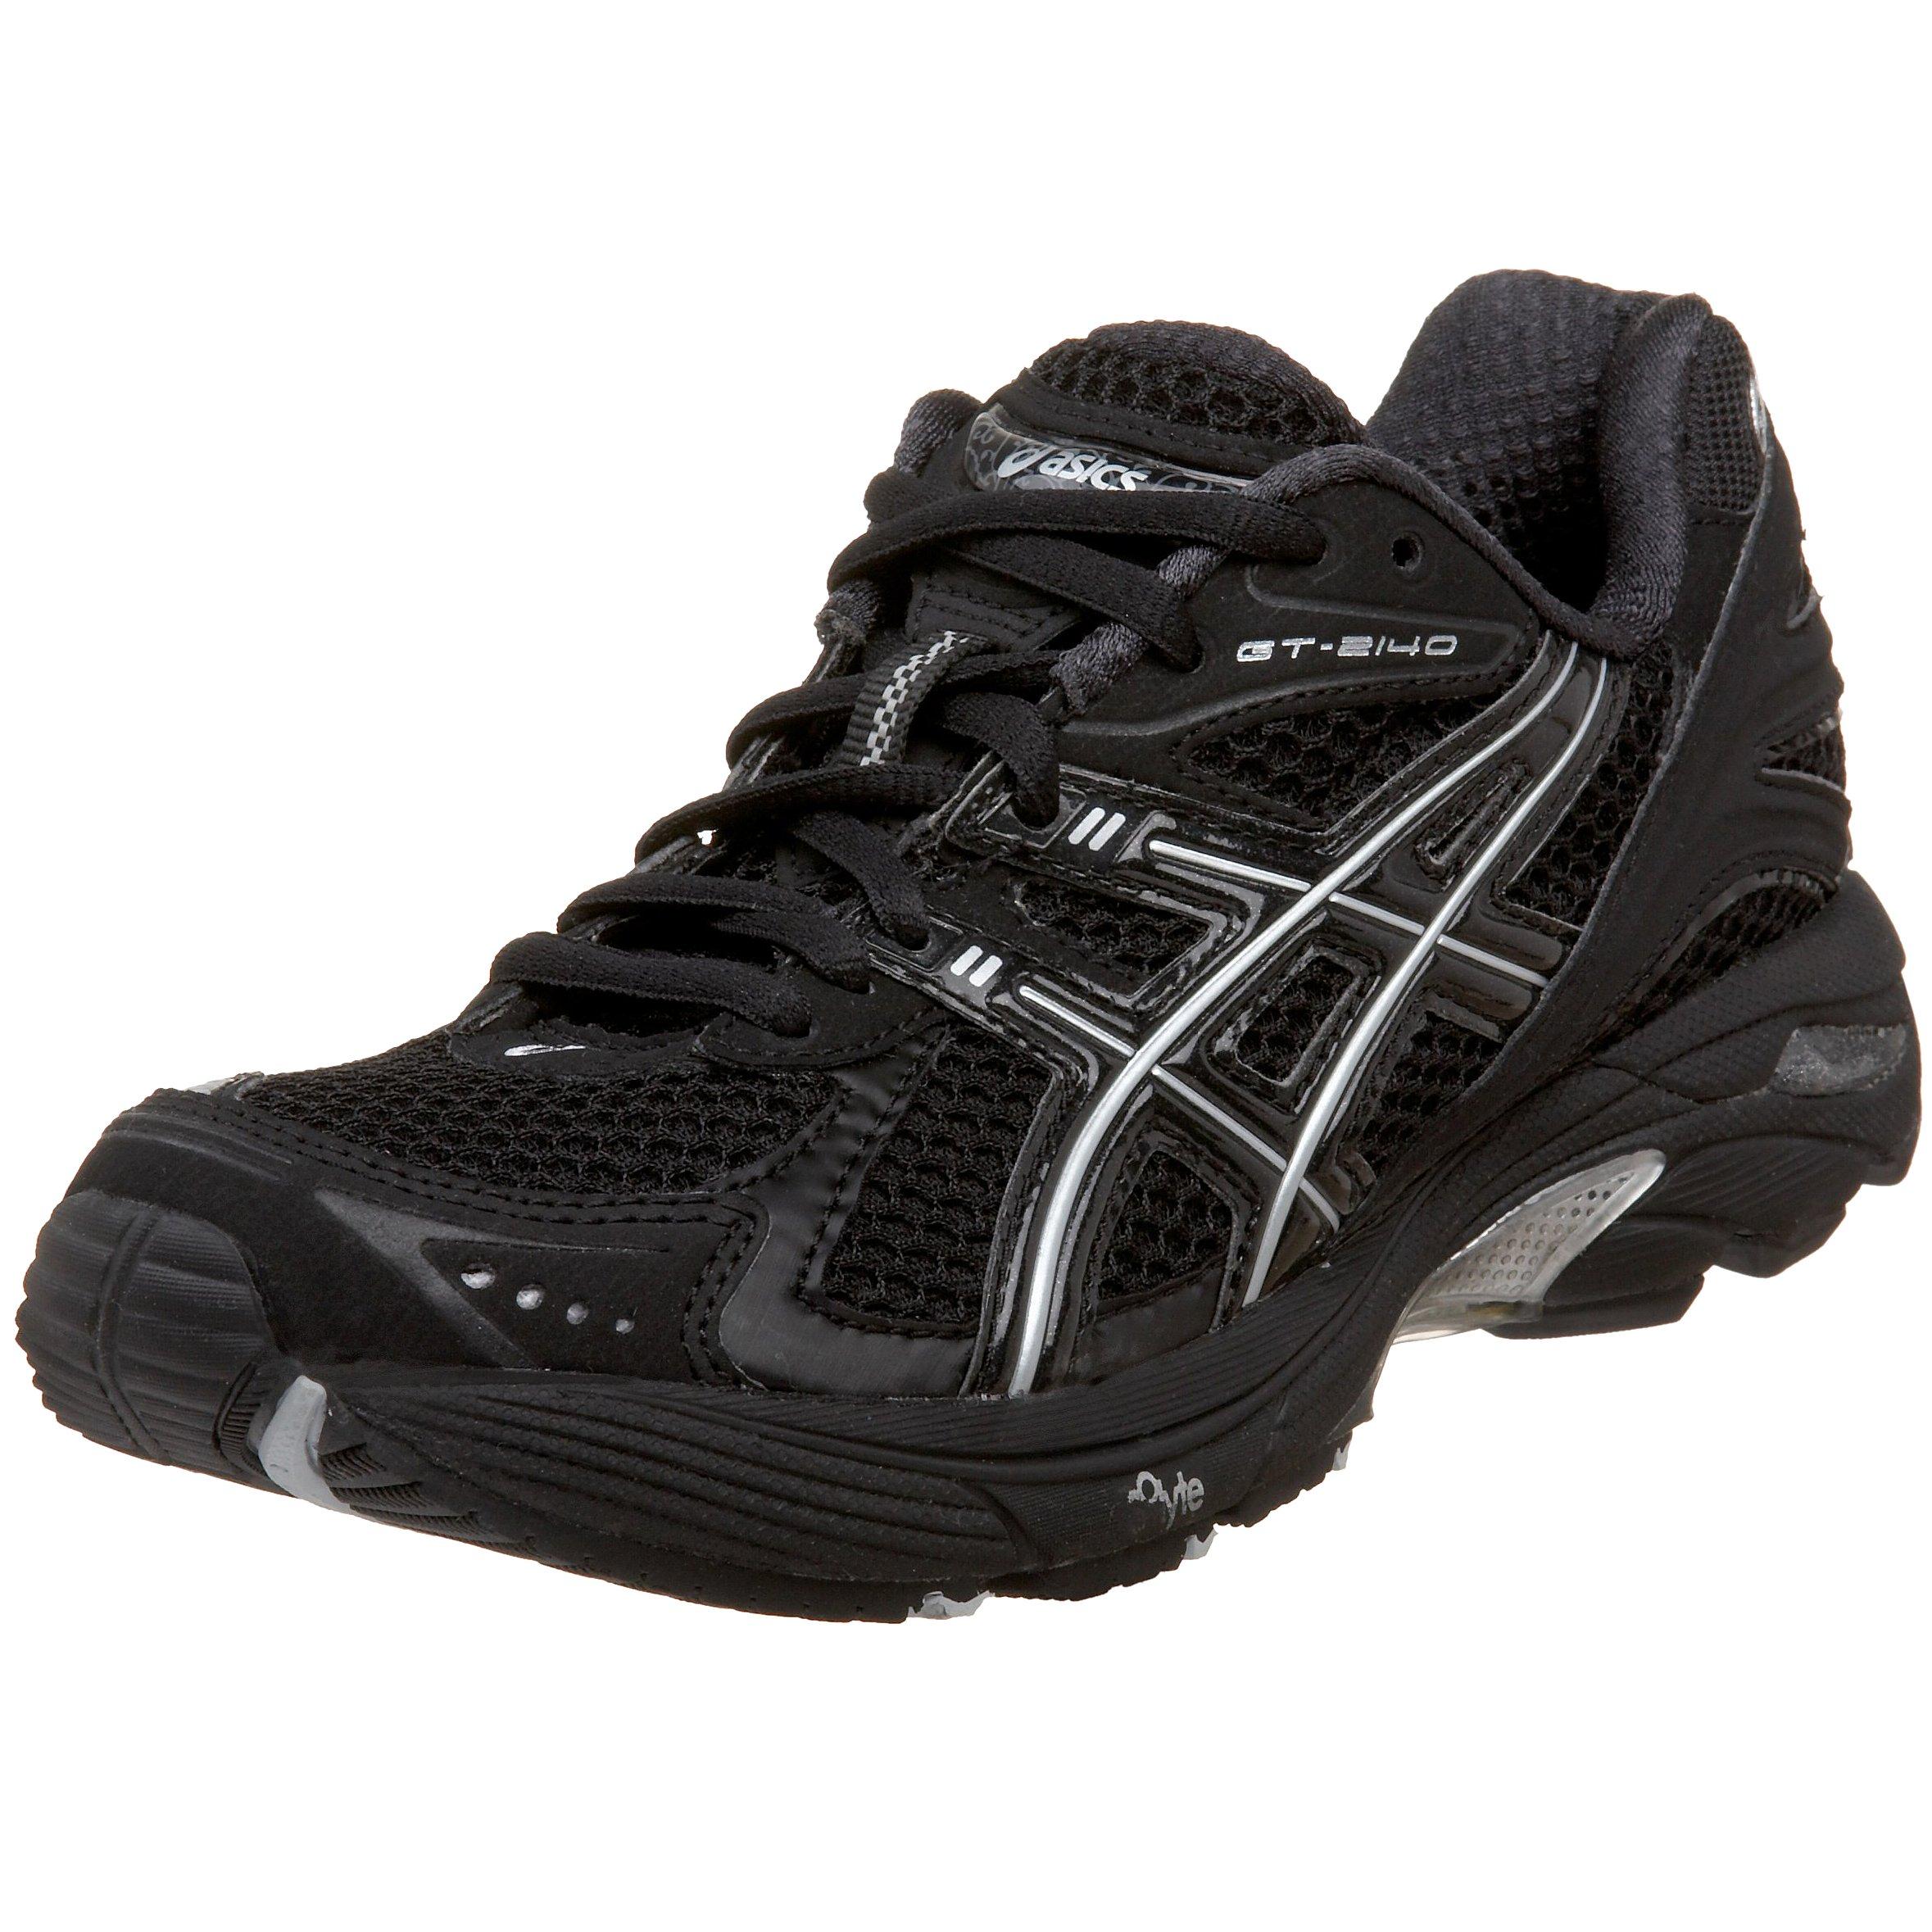 Asics Gt-2140 Running Shoe,onyx/black/lightning,11.5 D Us | Lyst